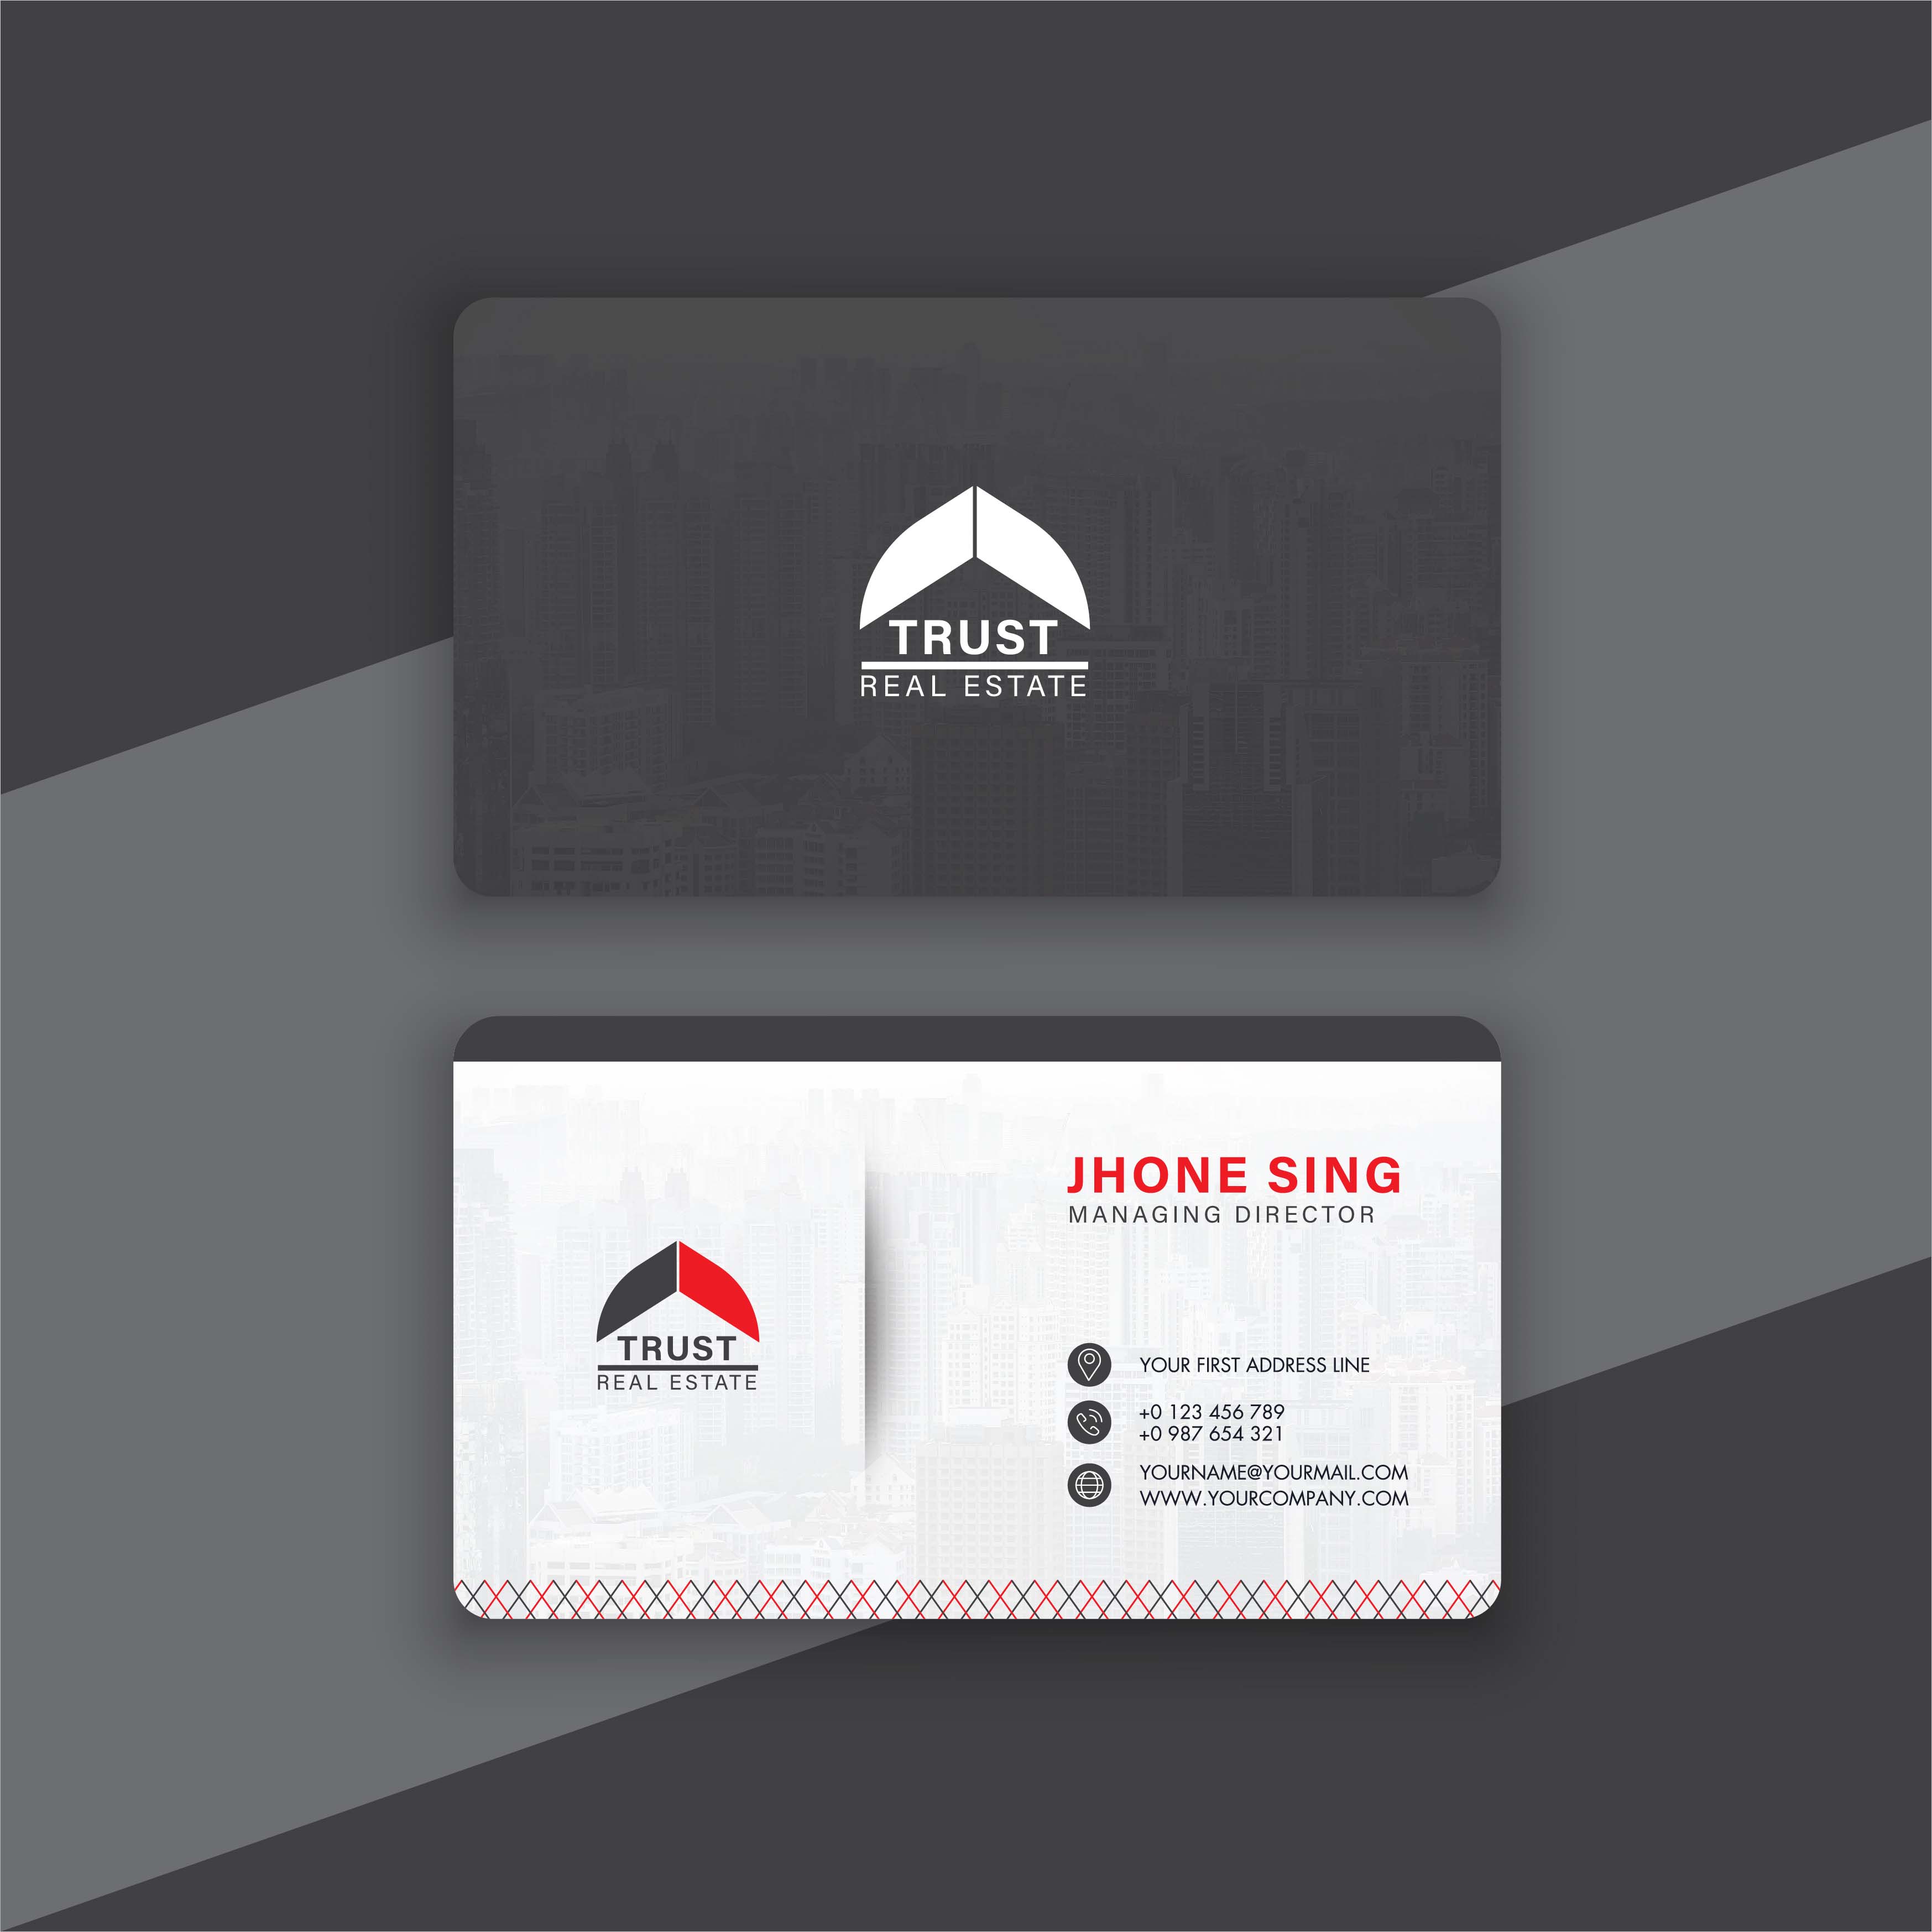 business card design - visiting card design pinterest preview image.